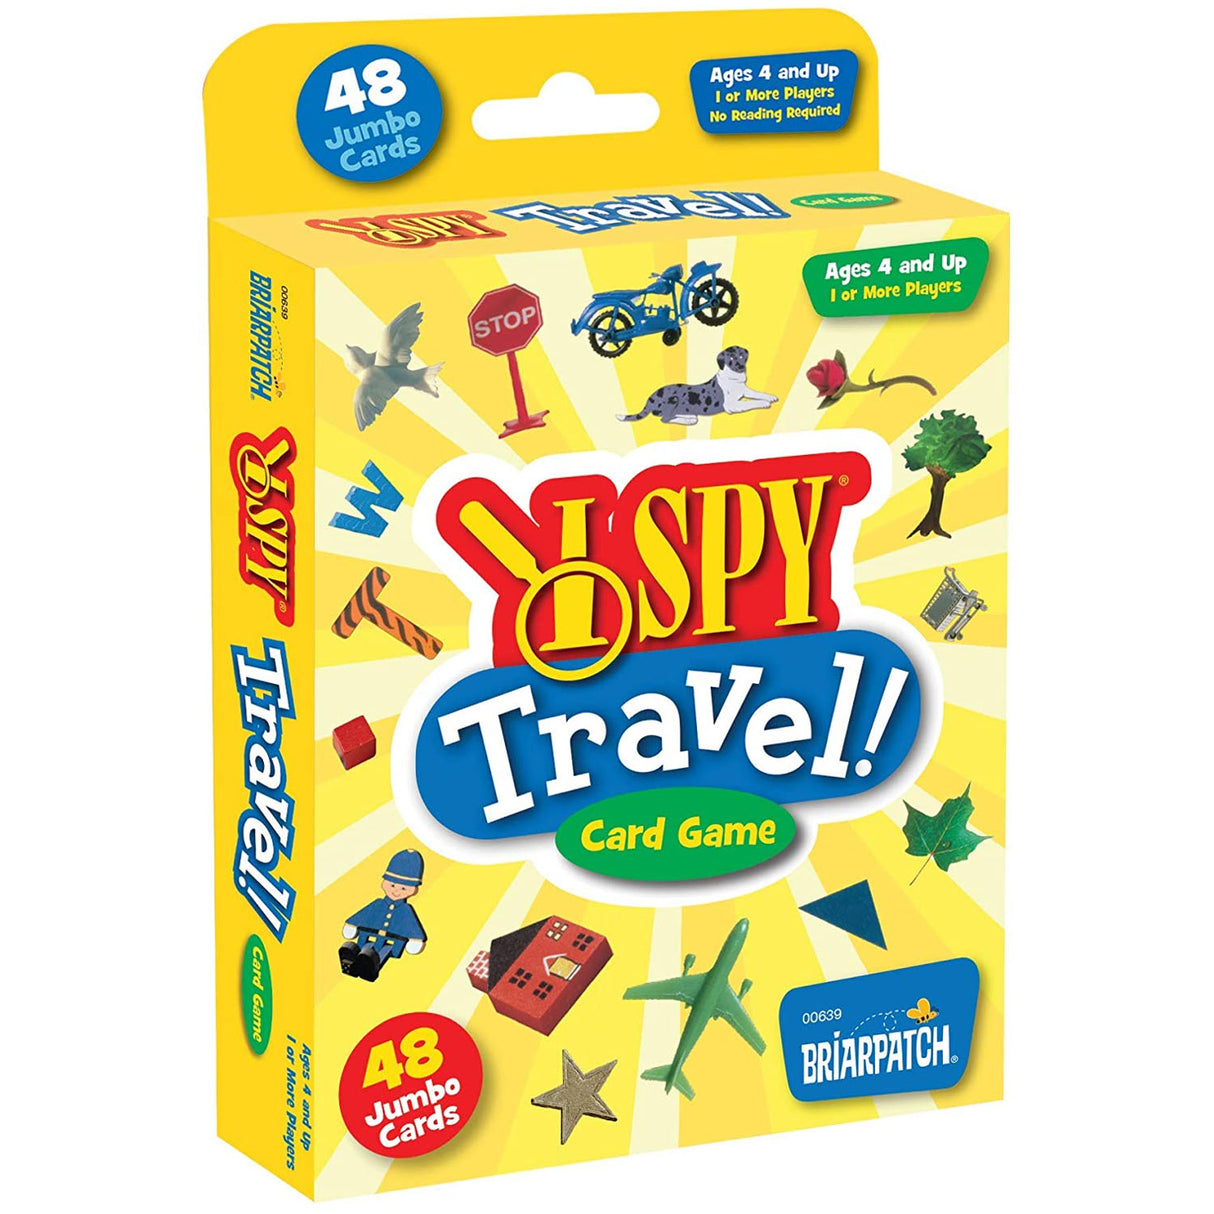 I Spy Travel! Card Game